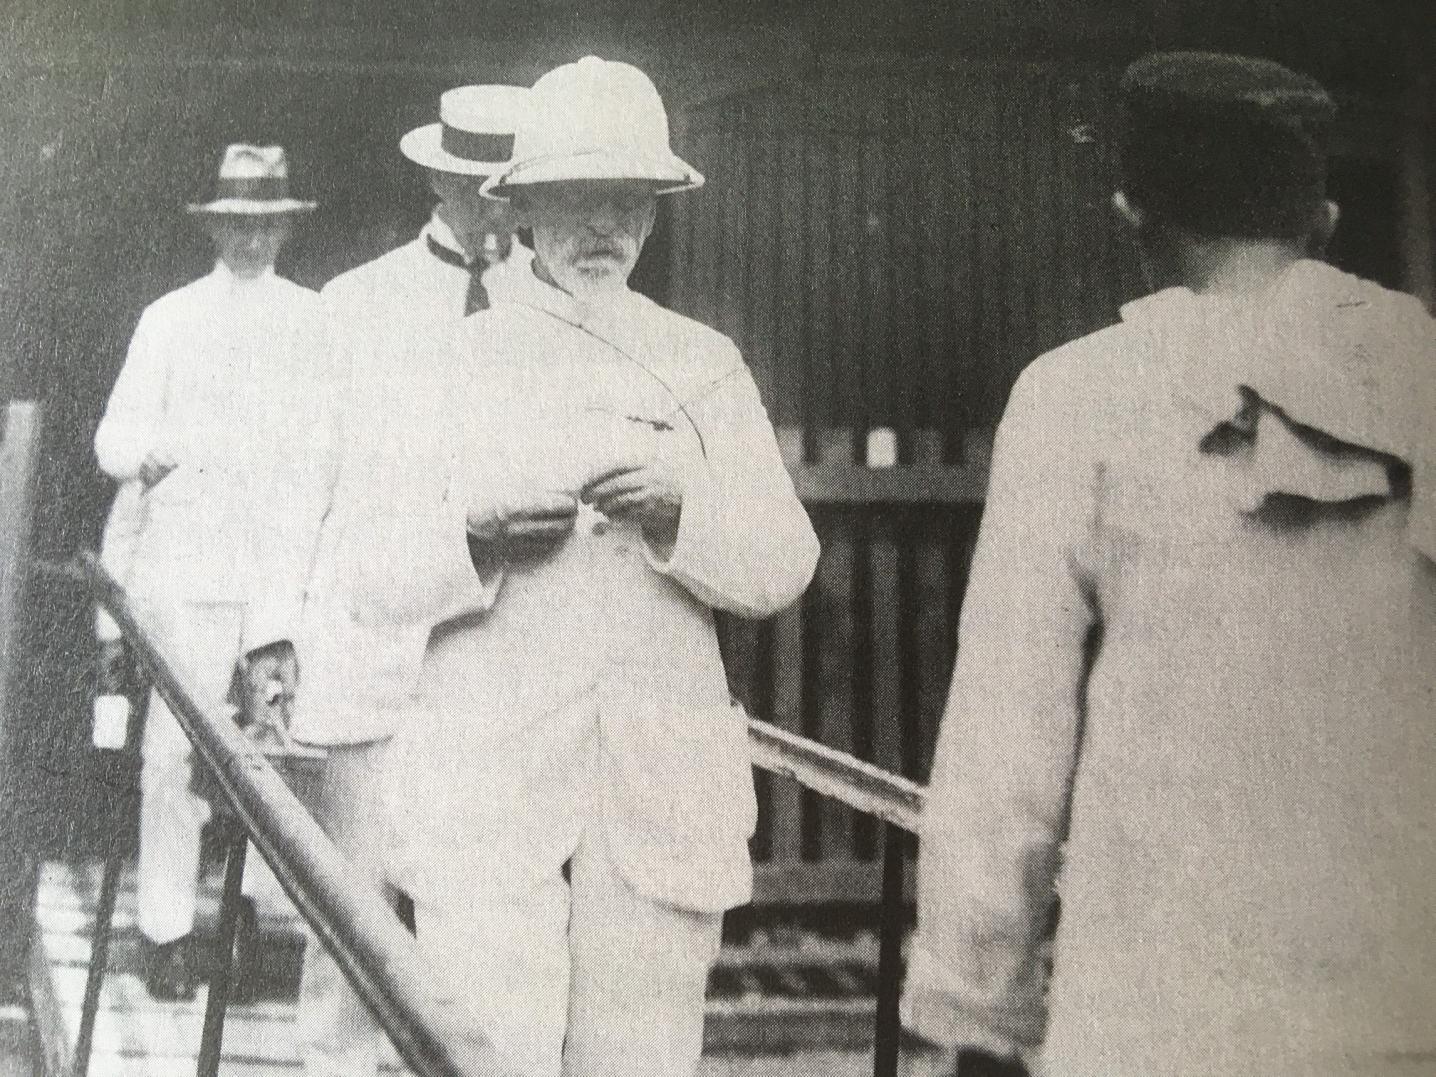 Berlage during his travels around the Dutch East Indies. Photo: archives of Berlage at Het Nieuwe Instituut